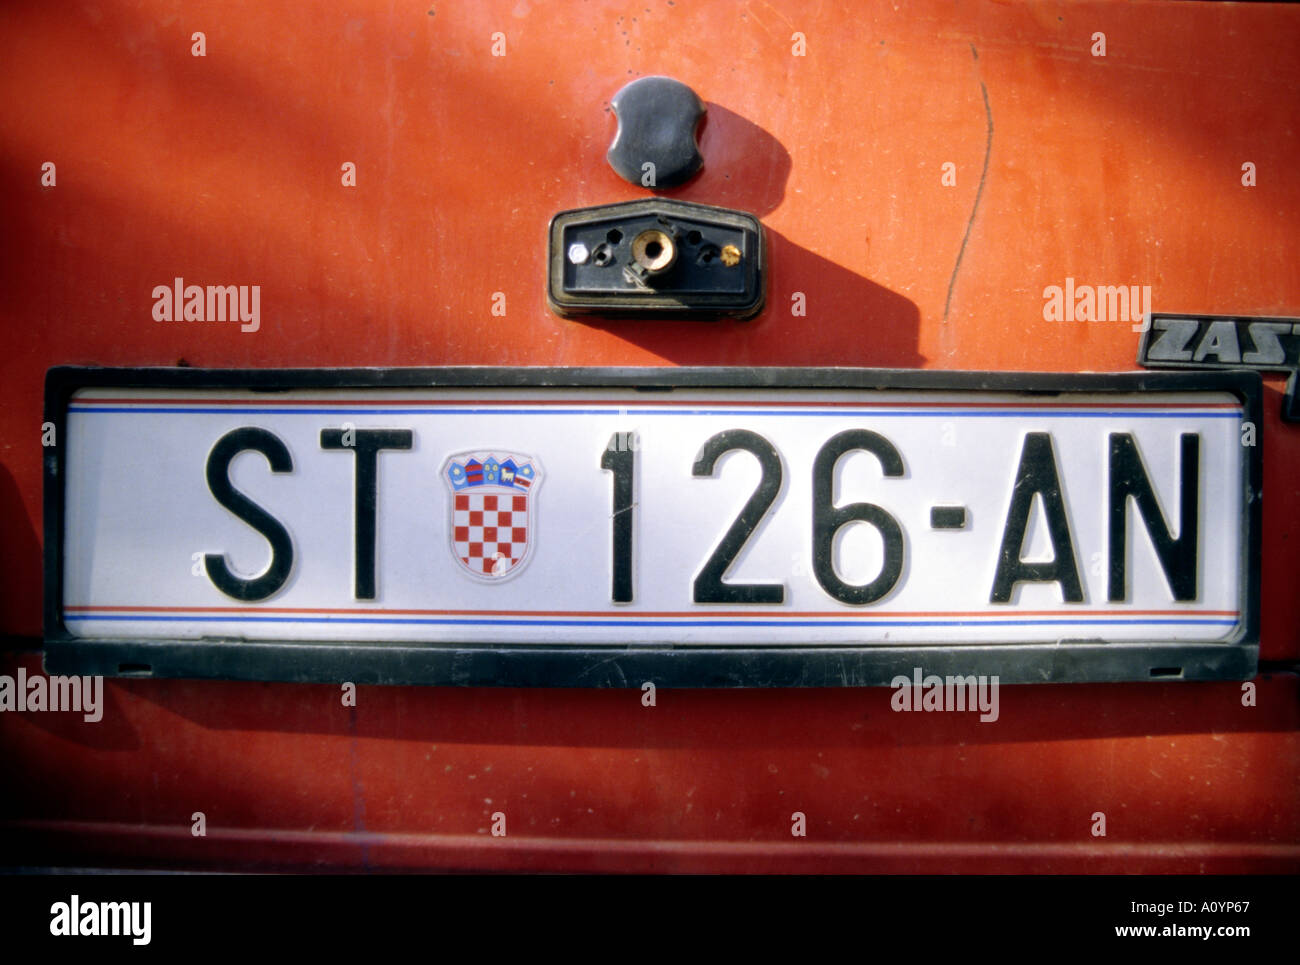 croatian license plate Stock Photo - Alamy